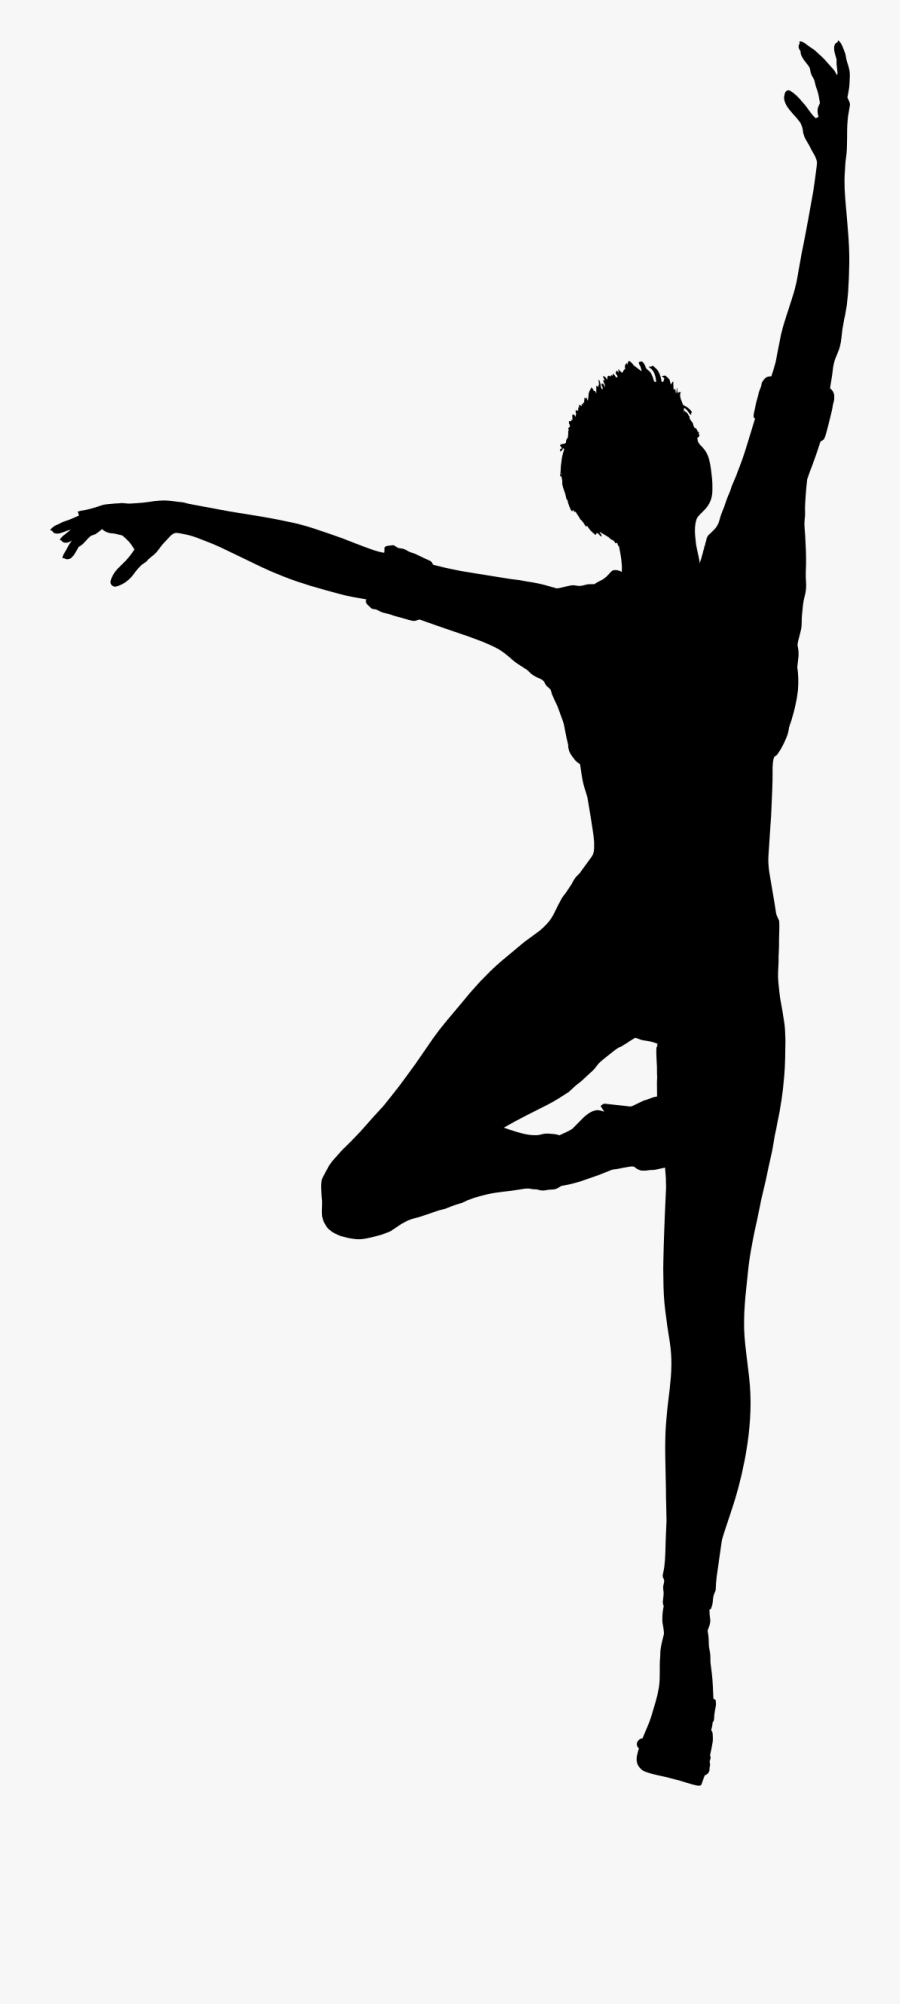 Dance Silhouette Clipart - Dancing Woman Silhouette Png, Transparent Clipart